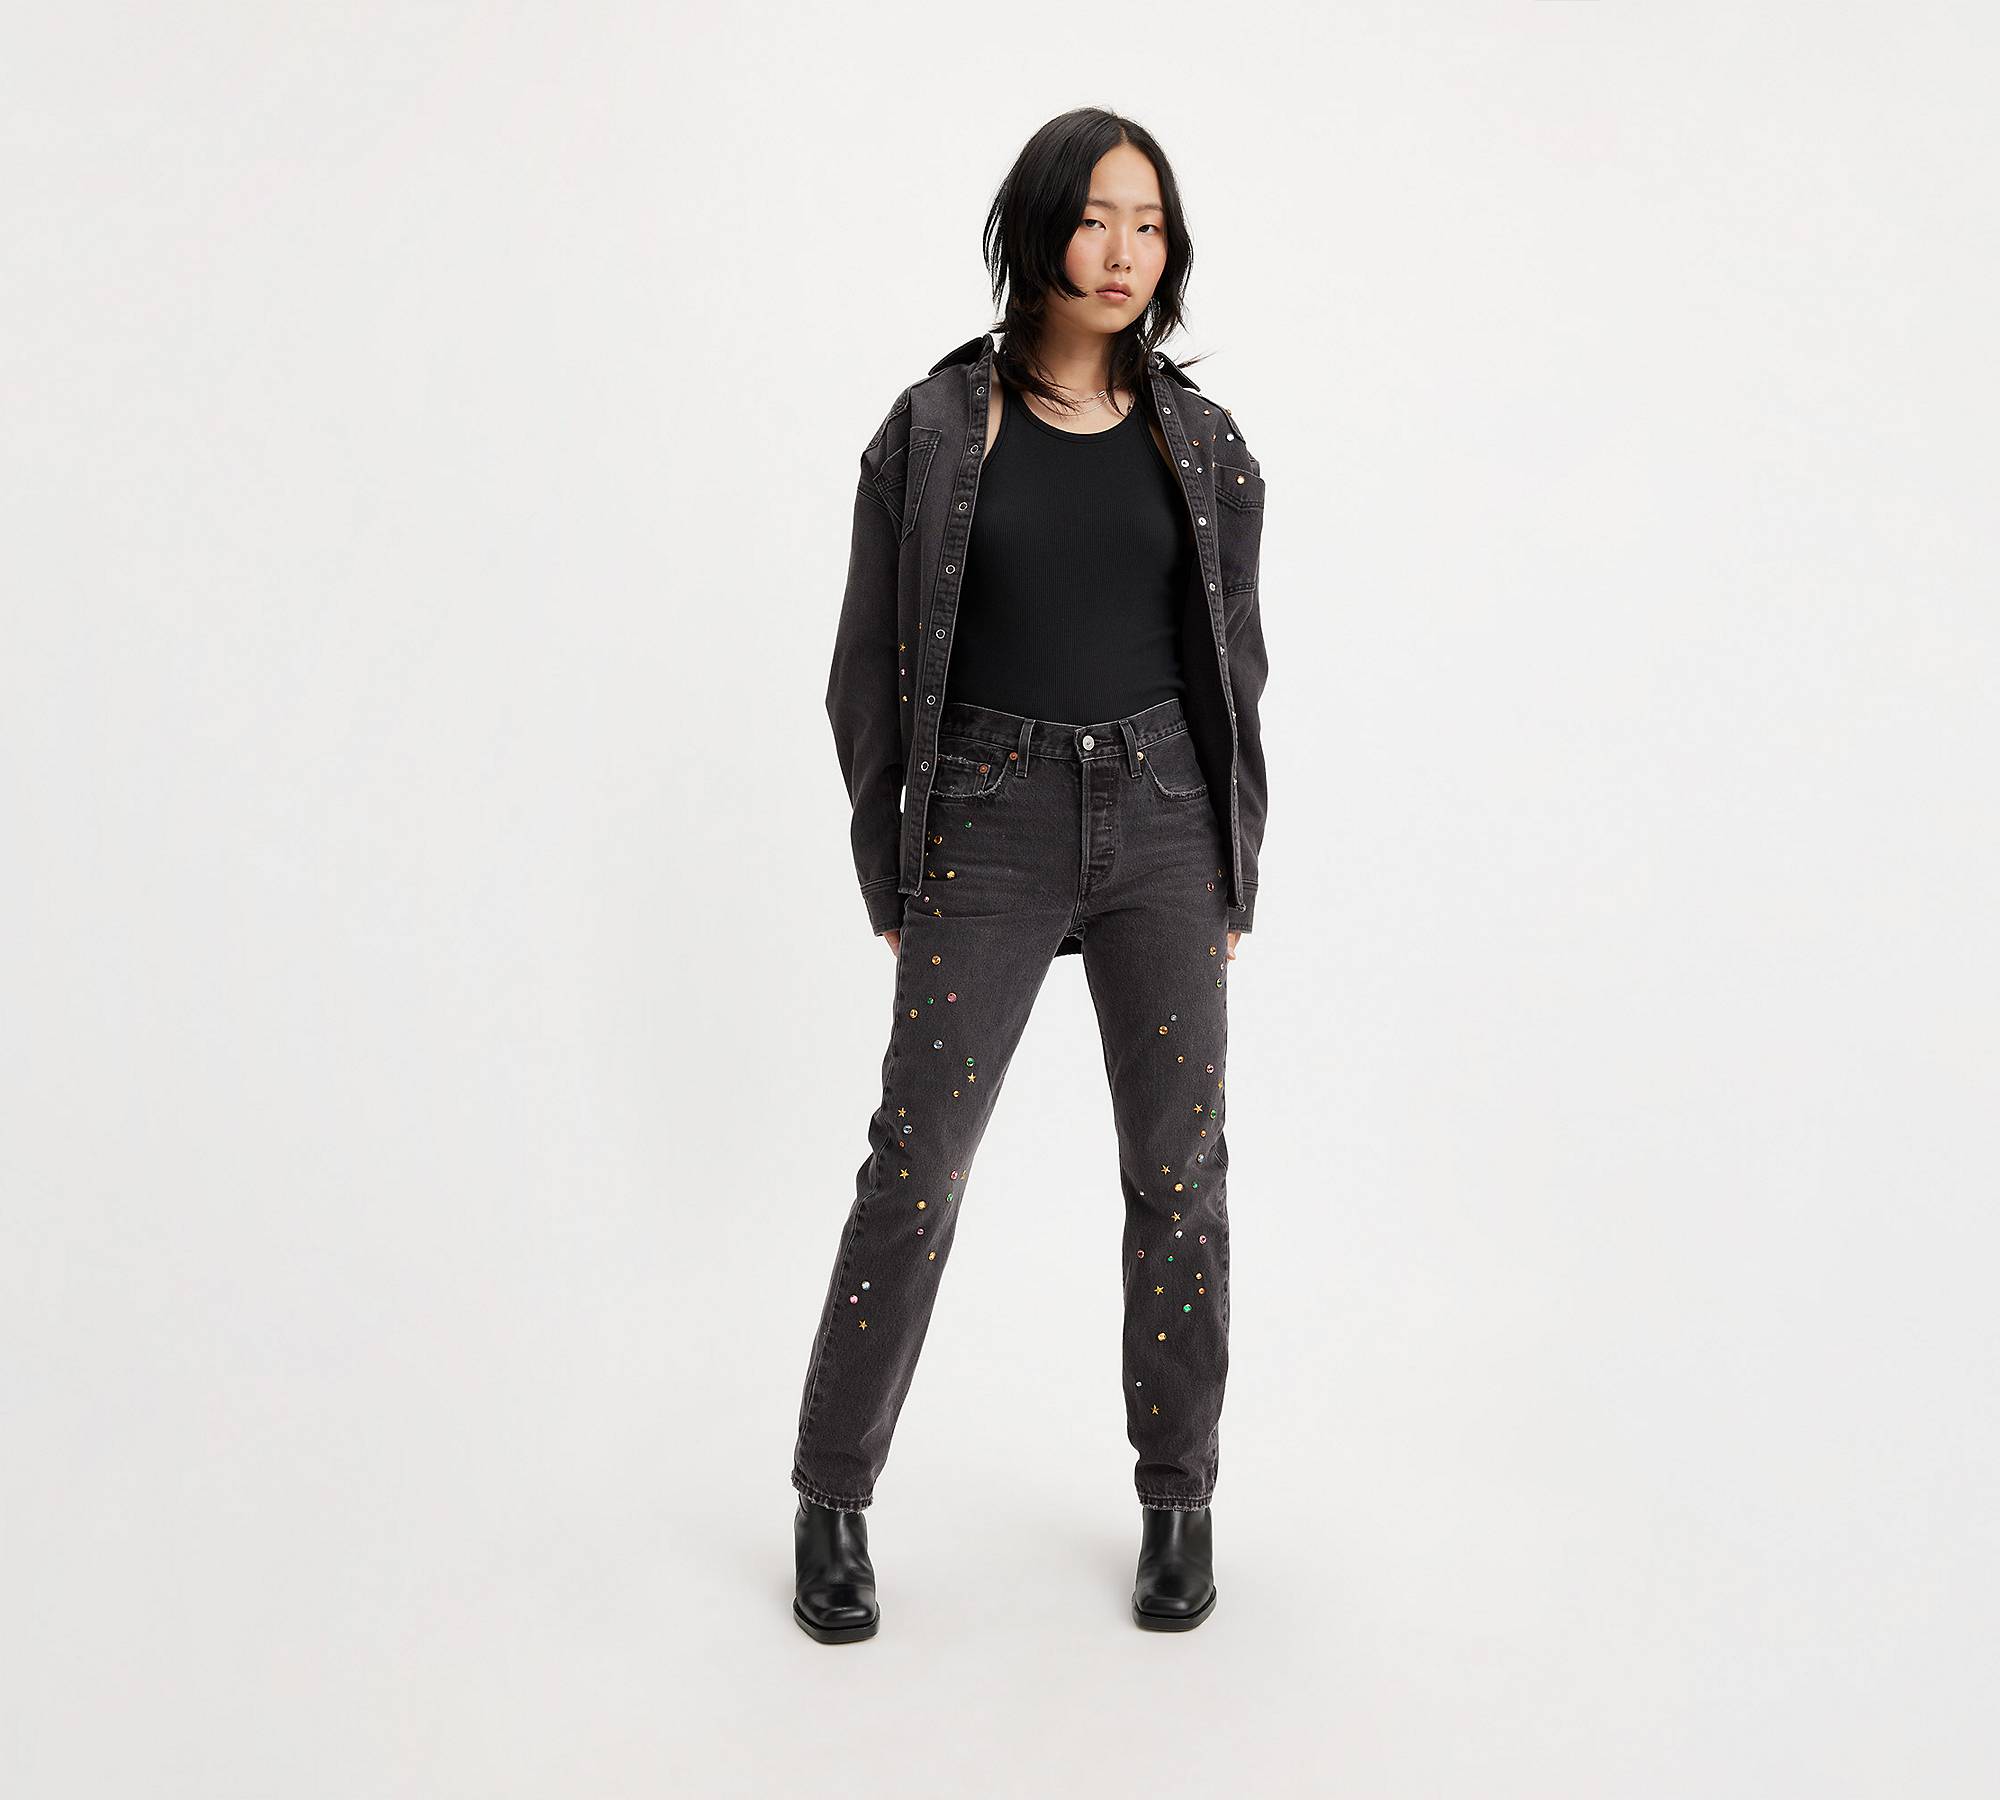 501® Original Fit Studded Women's Jeans - Black